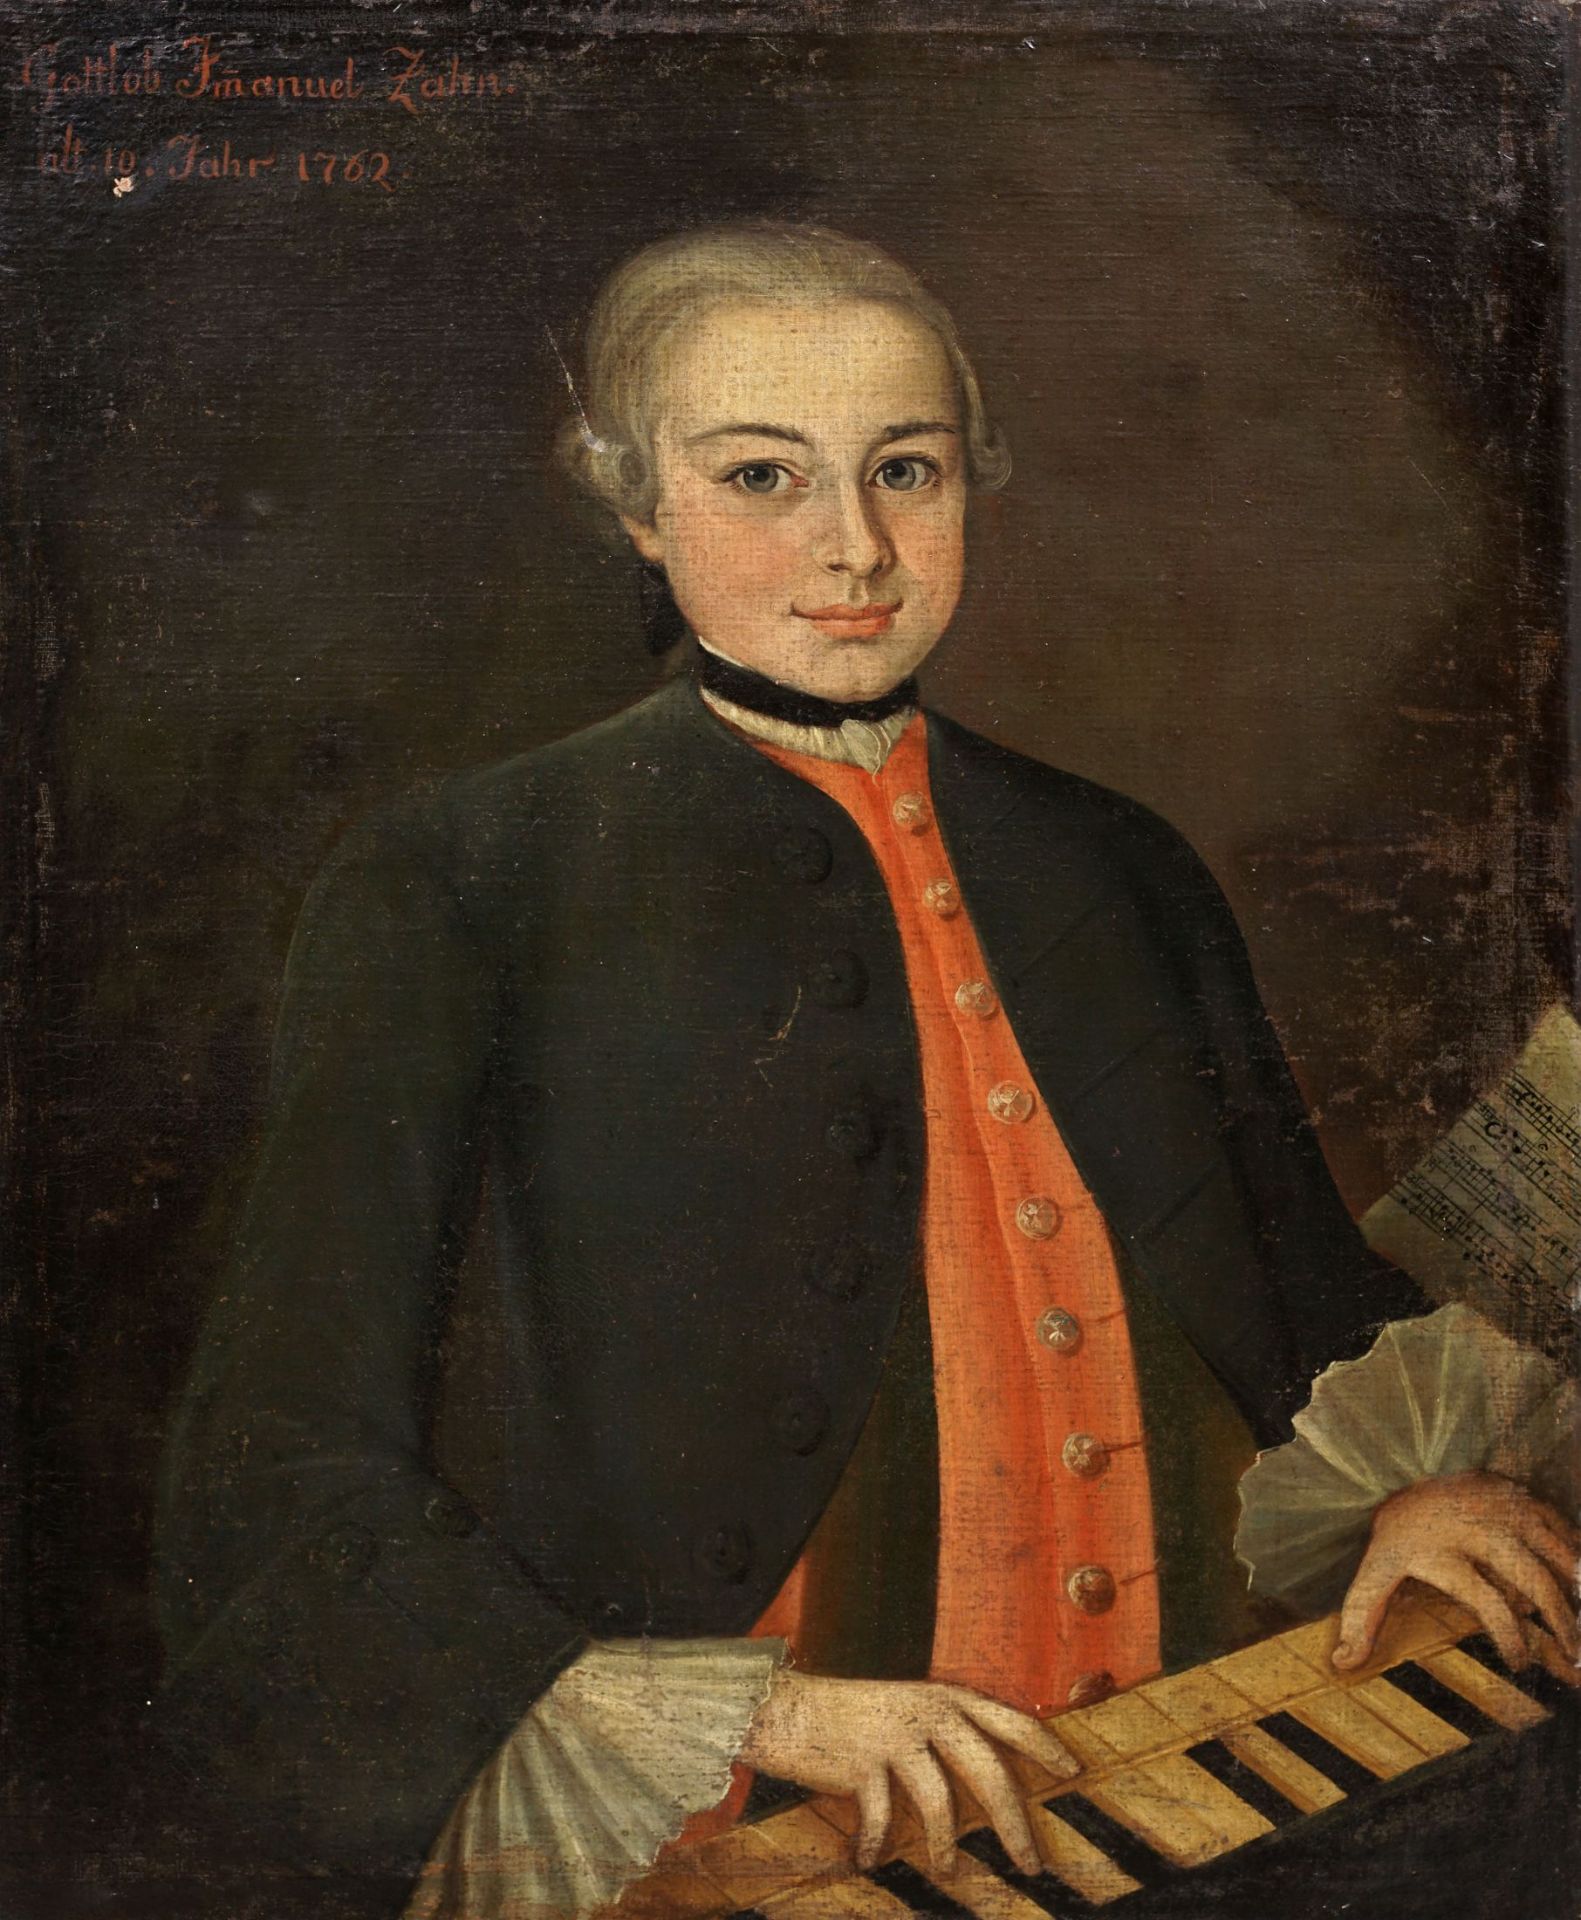 Deutscher Bildnismaler, Bildnis Gottlob Imanuel Zahn. 1762.